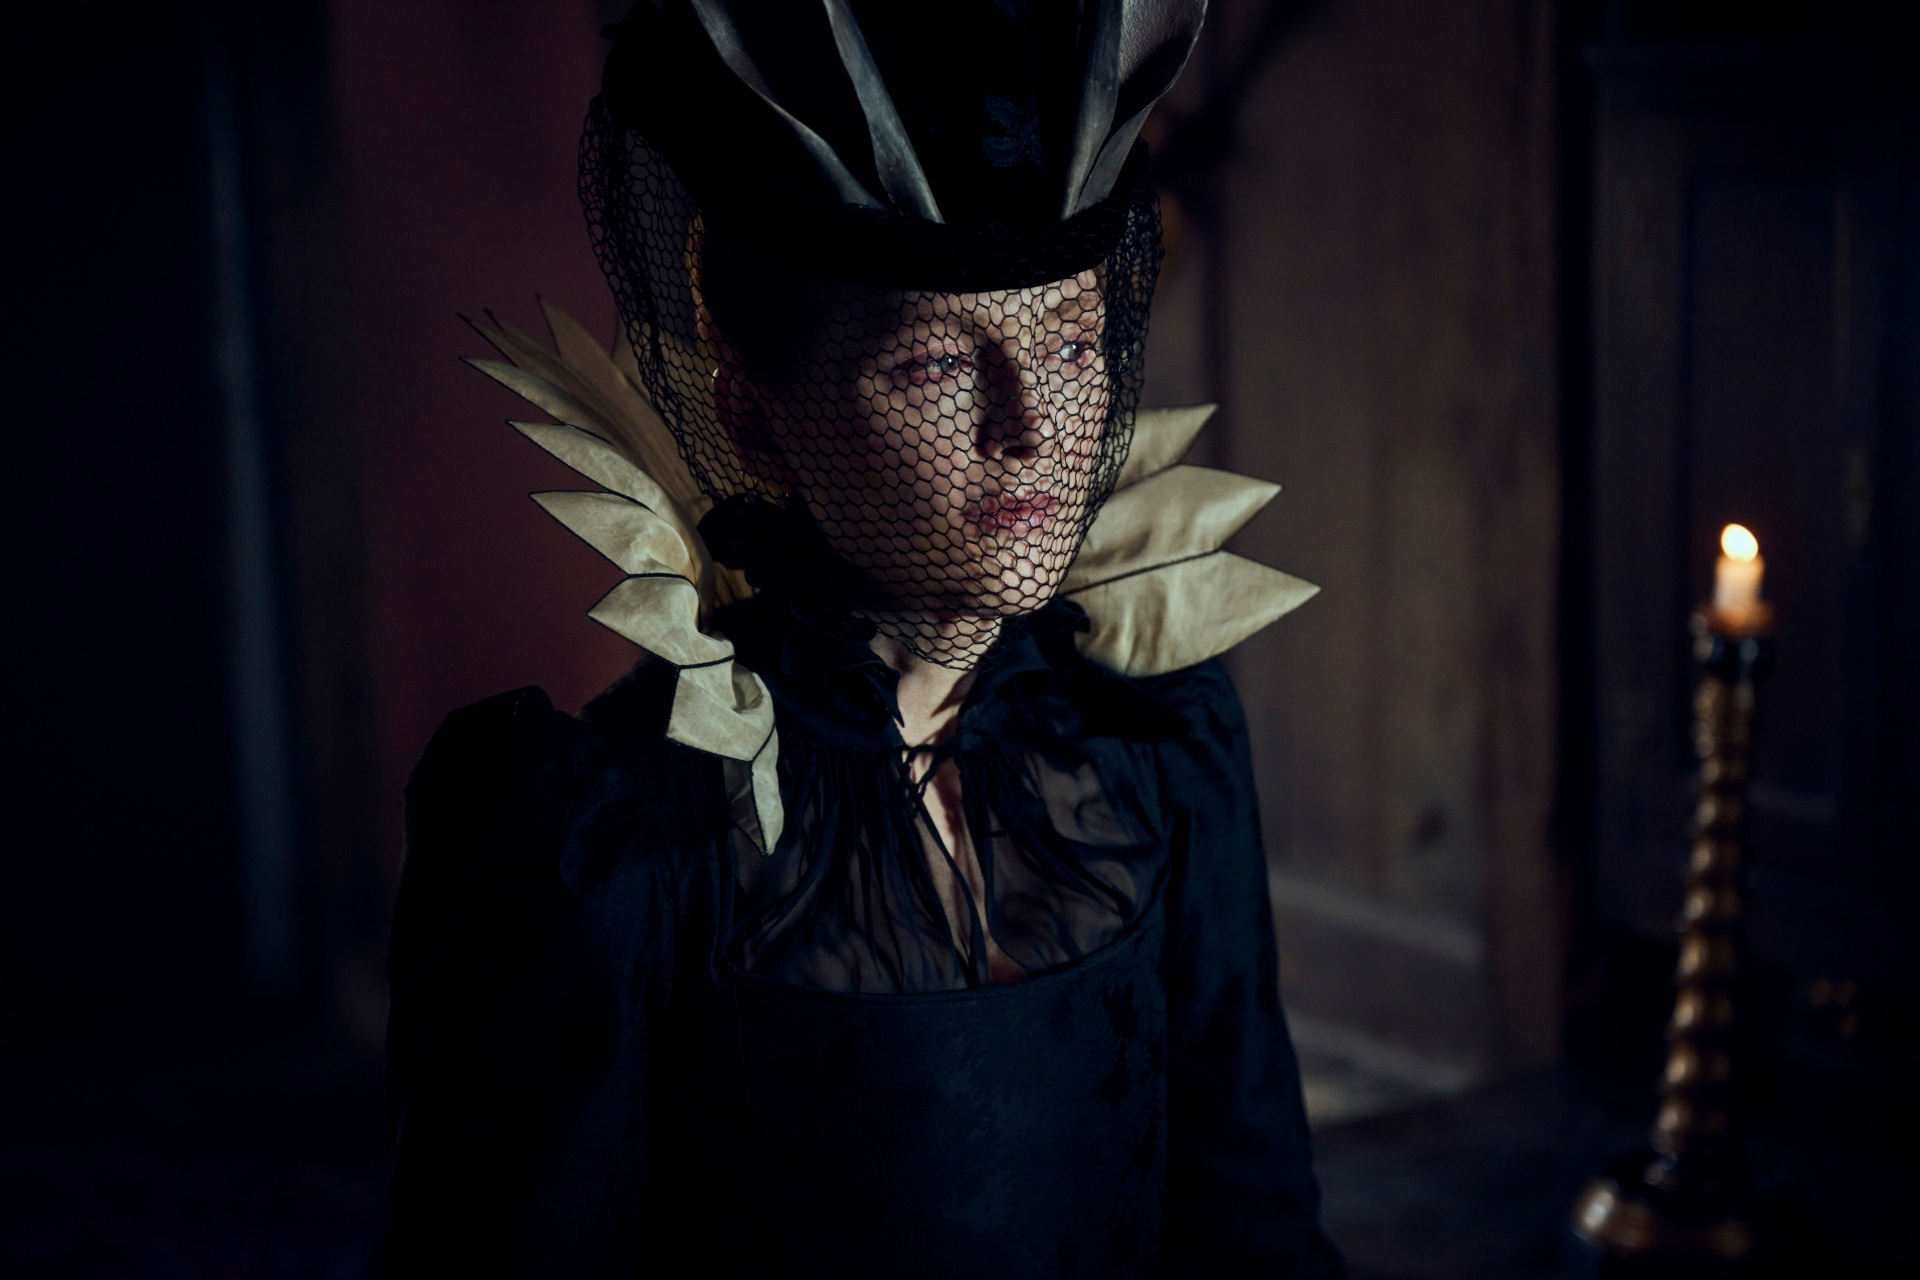 Julianne Moore as Mary wearing Jacobean style dress in 'Mary & George'